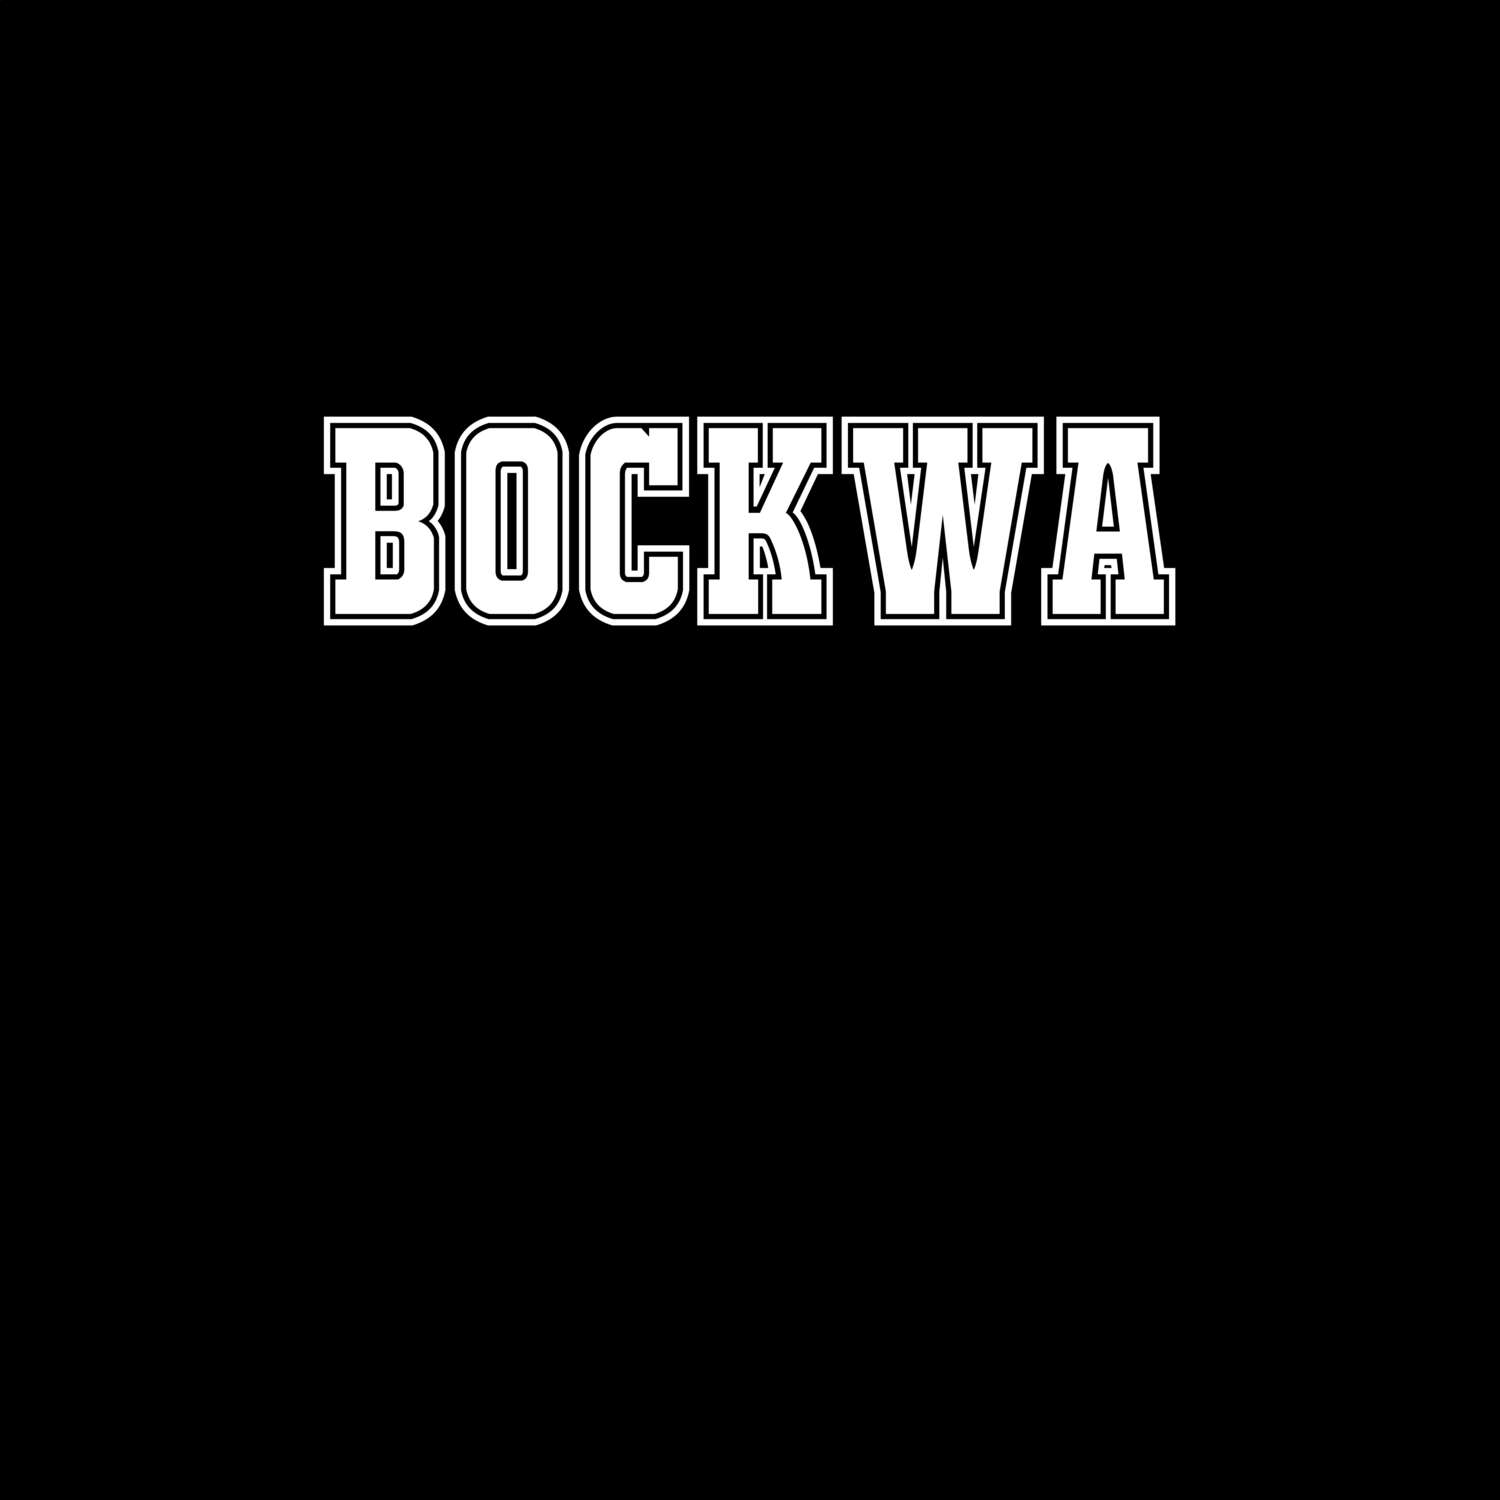 Bockwa T-Shirt »Classic«